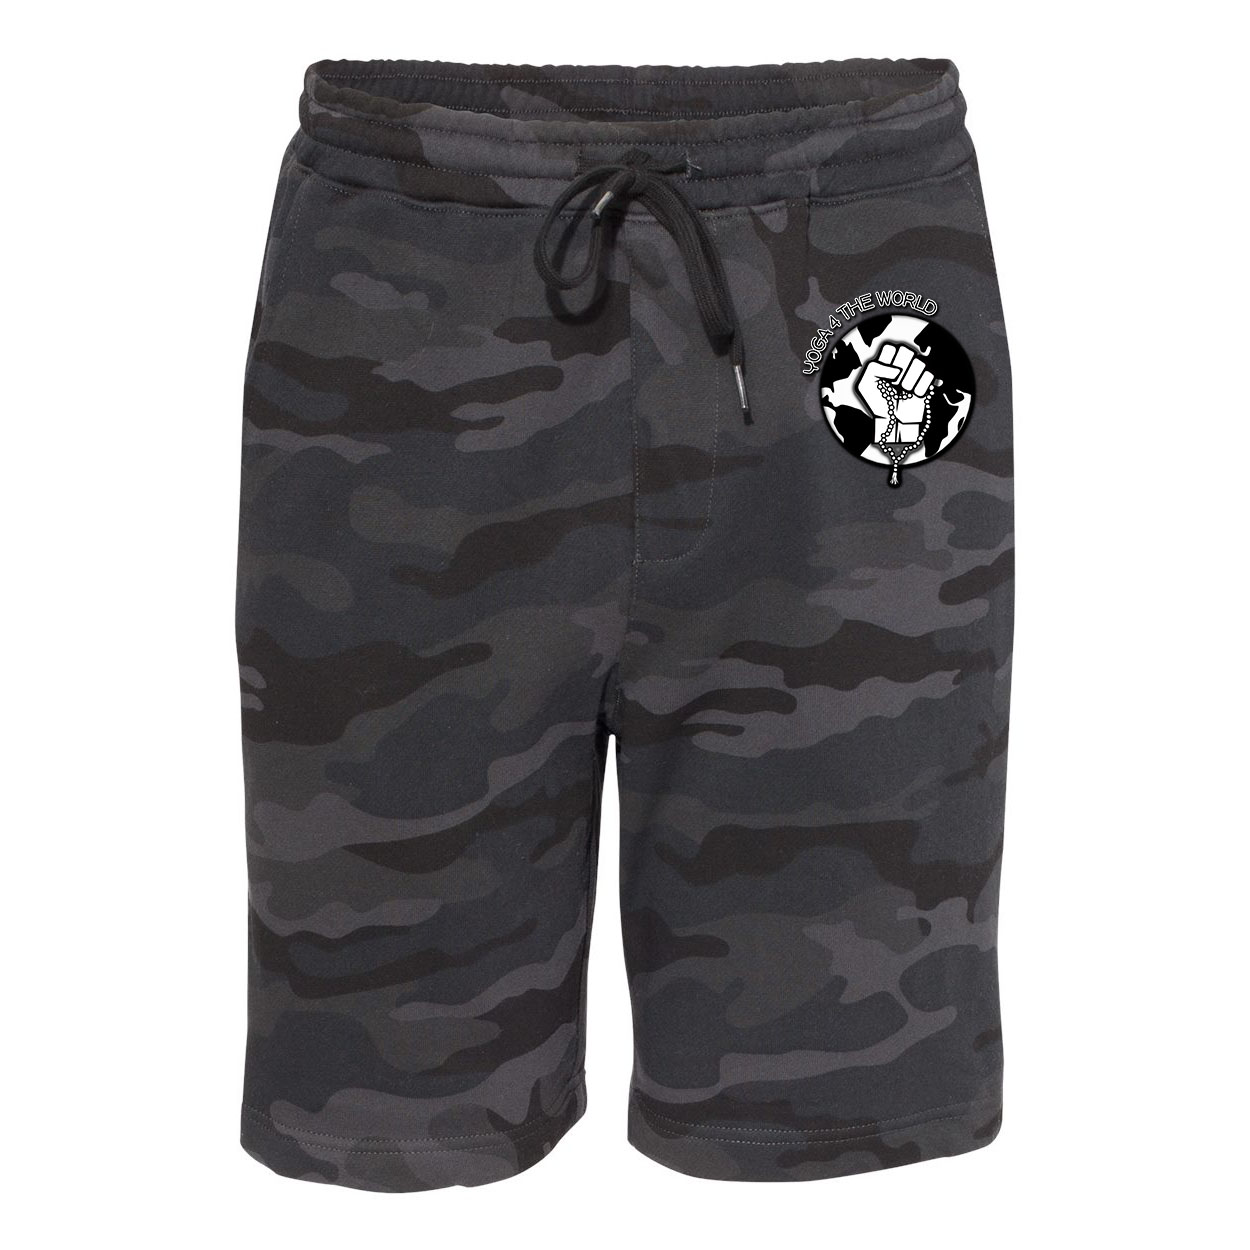 Yoga4TheWorld Black Camo Fleece Shorts